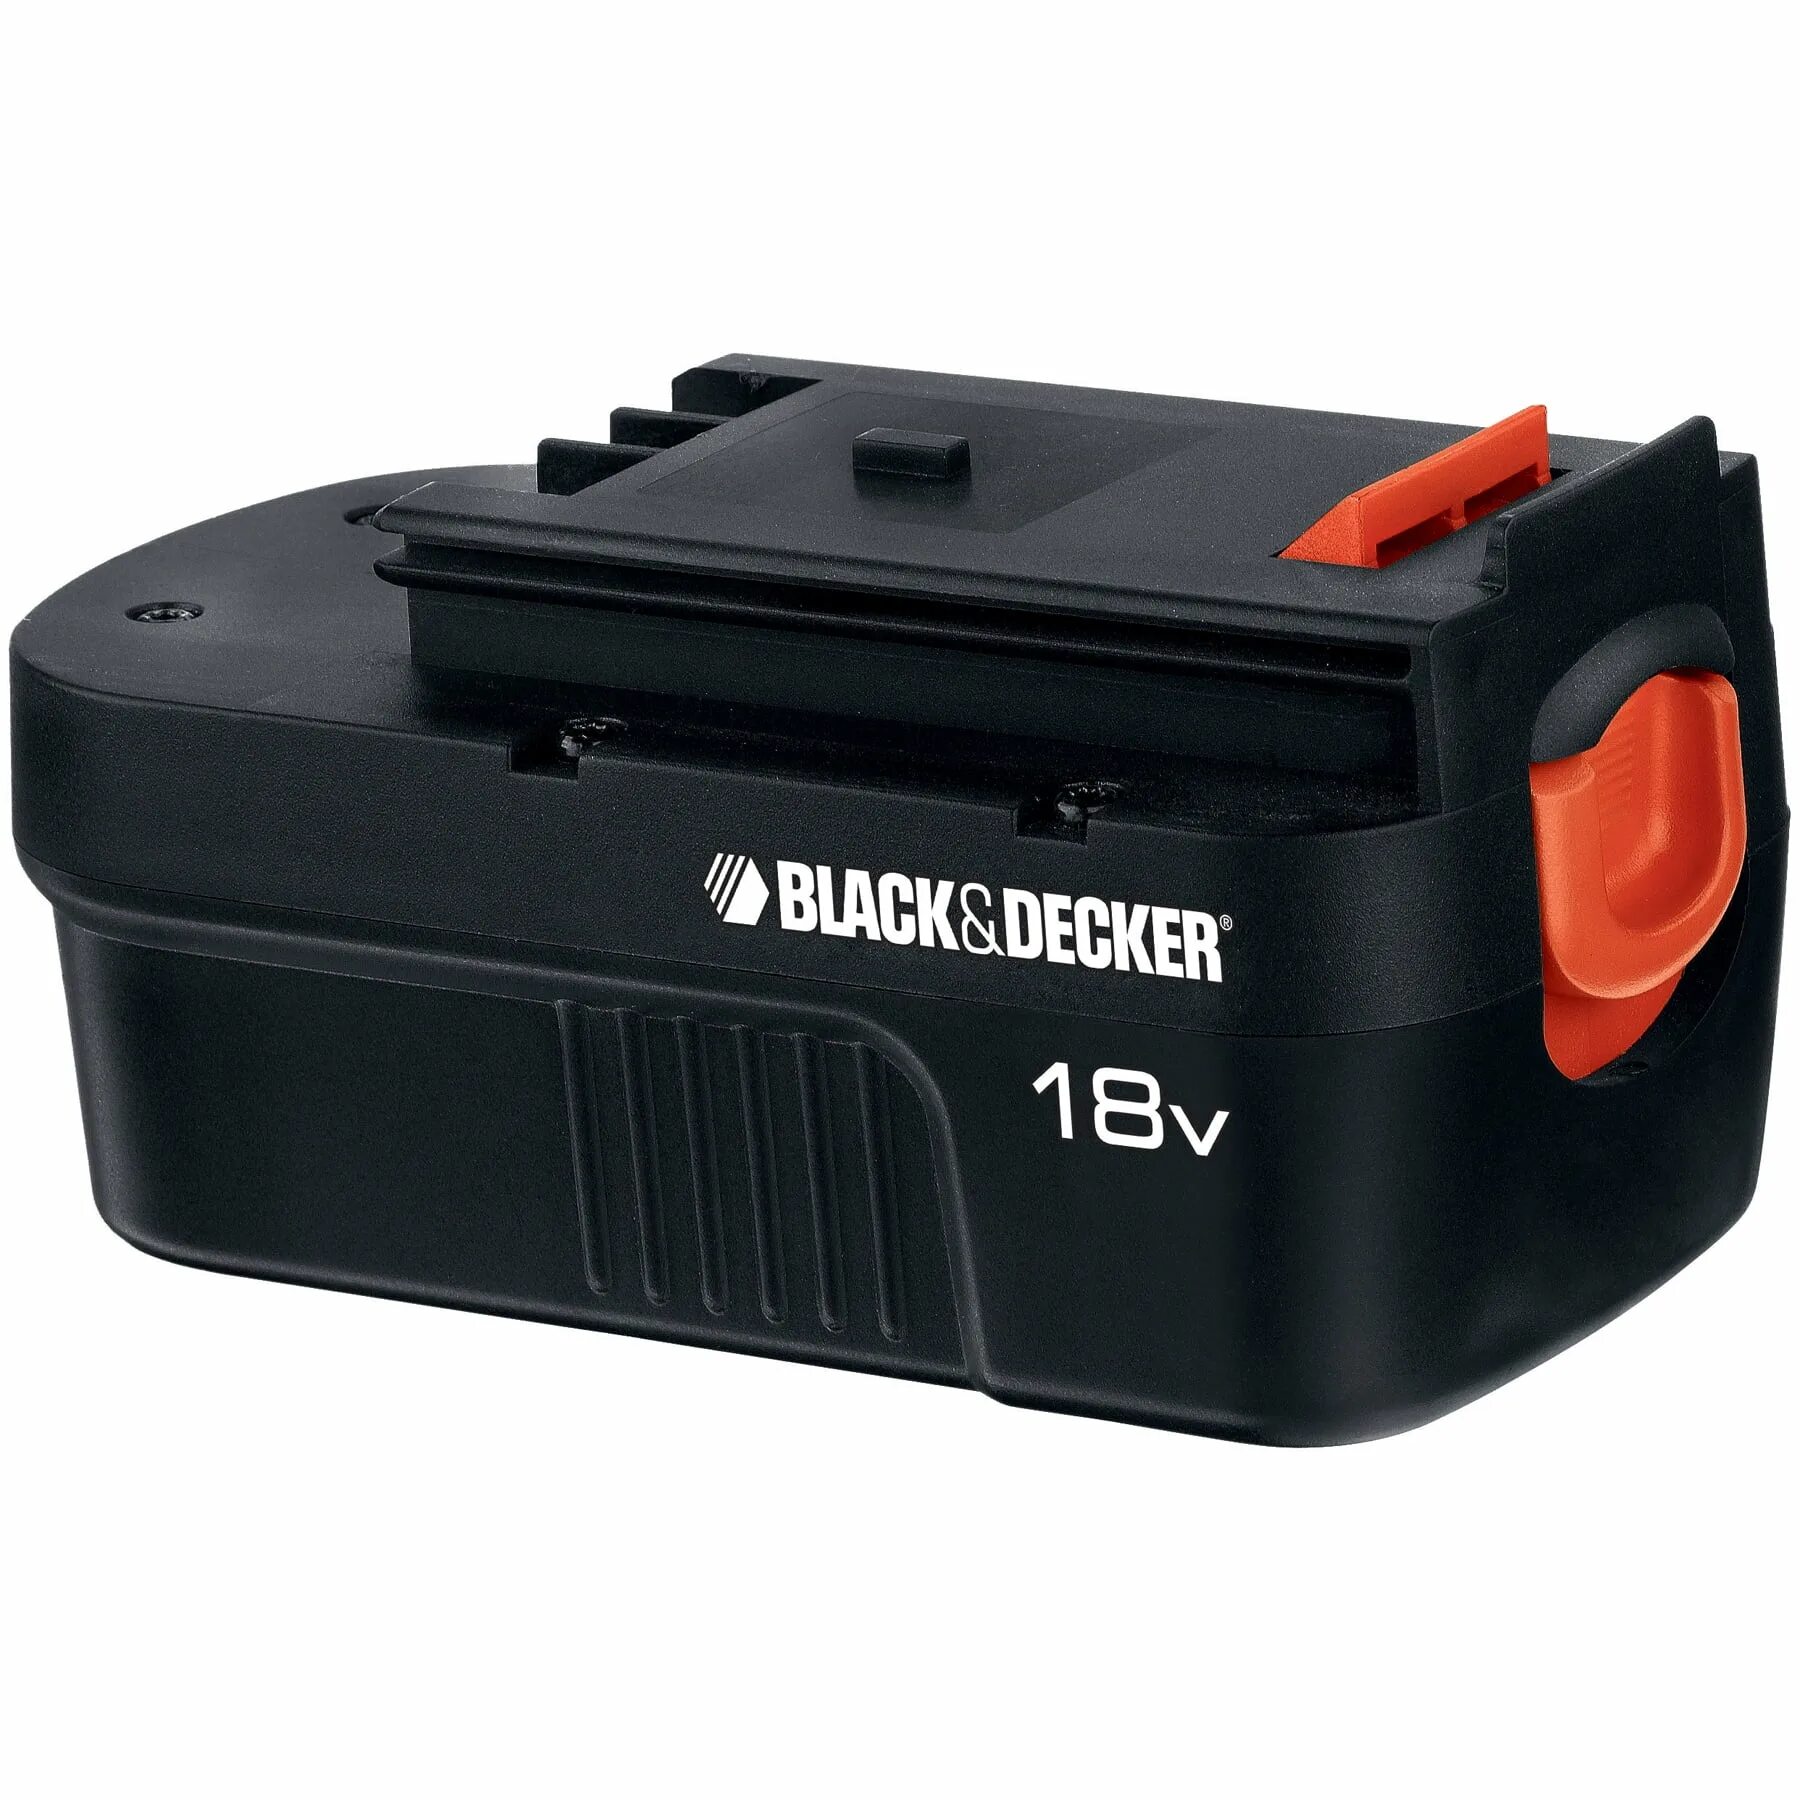 Аккумулятор (18 в; 2.0 Ач; li-ion) для Black & Decker CD, KS, PS (bl2018-XJ) OEM 074939. Аккумулятор Блэк энд Деккер 18v. Аккумулятор Black+Decker 18 вольт. Black Decker аккумулятор 18v schema.